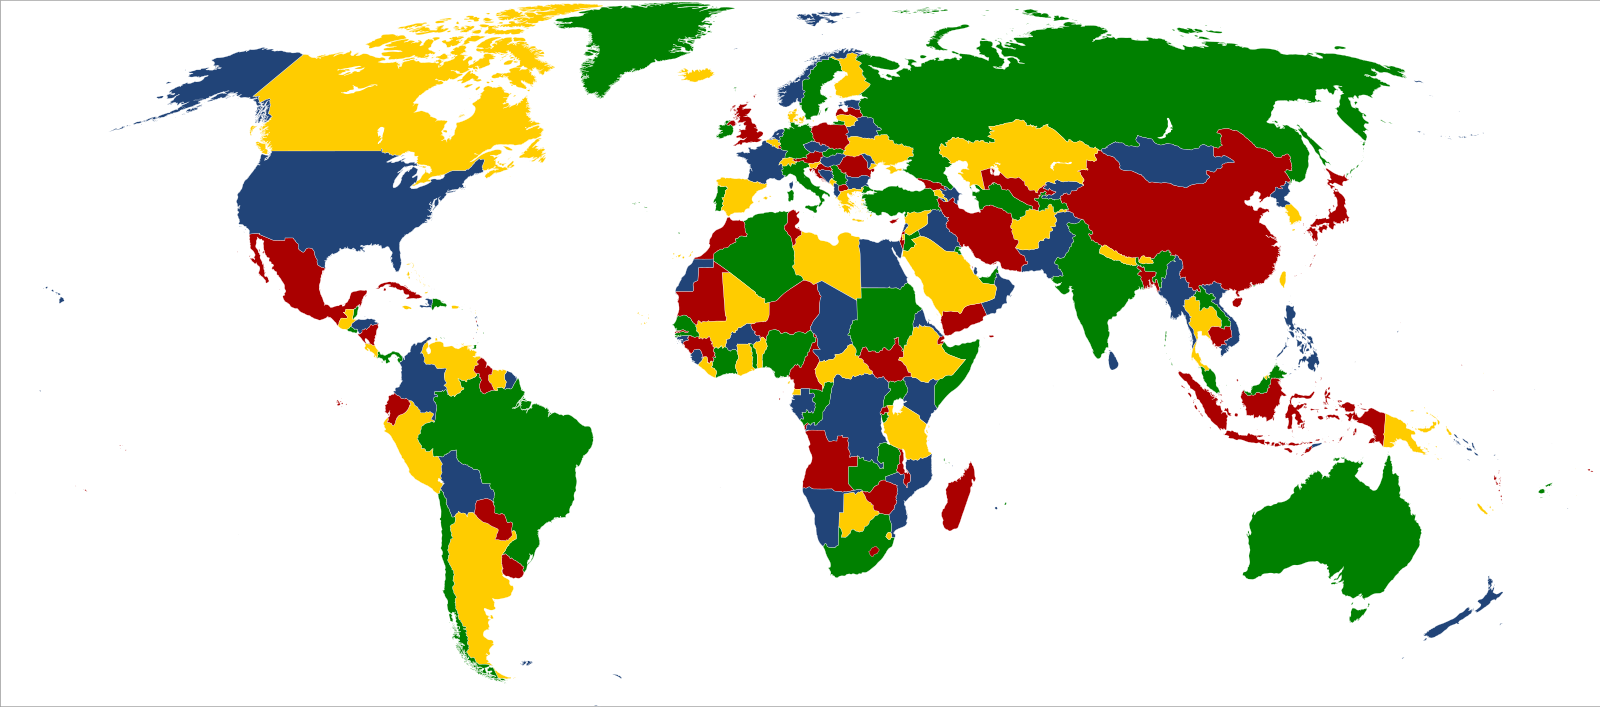 Colours of the world. Карта мира. Карта цветная. Страны на карте разными цветами. Карта мира в цвете.